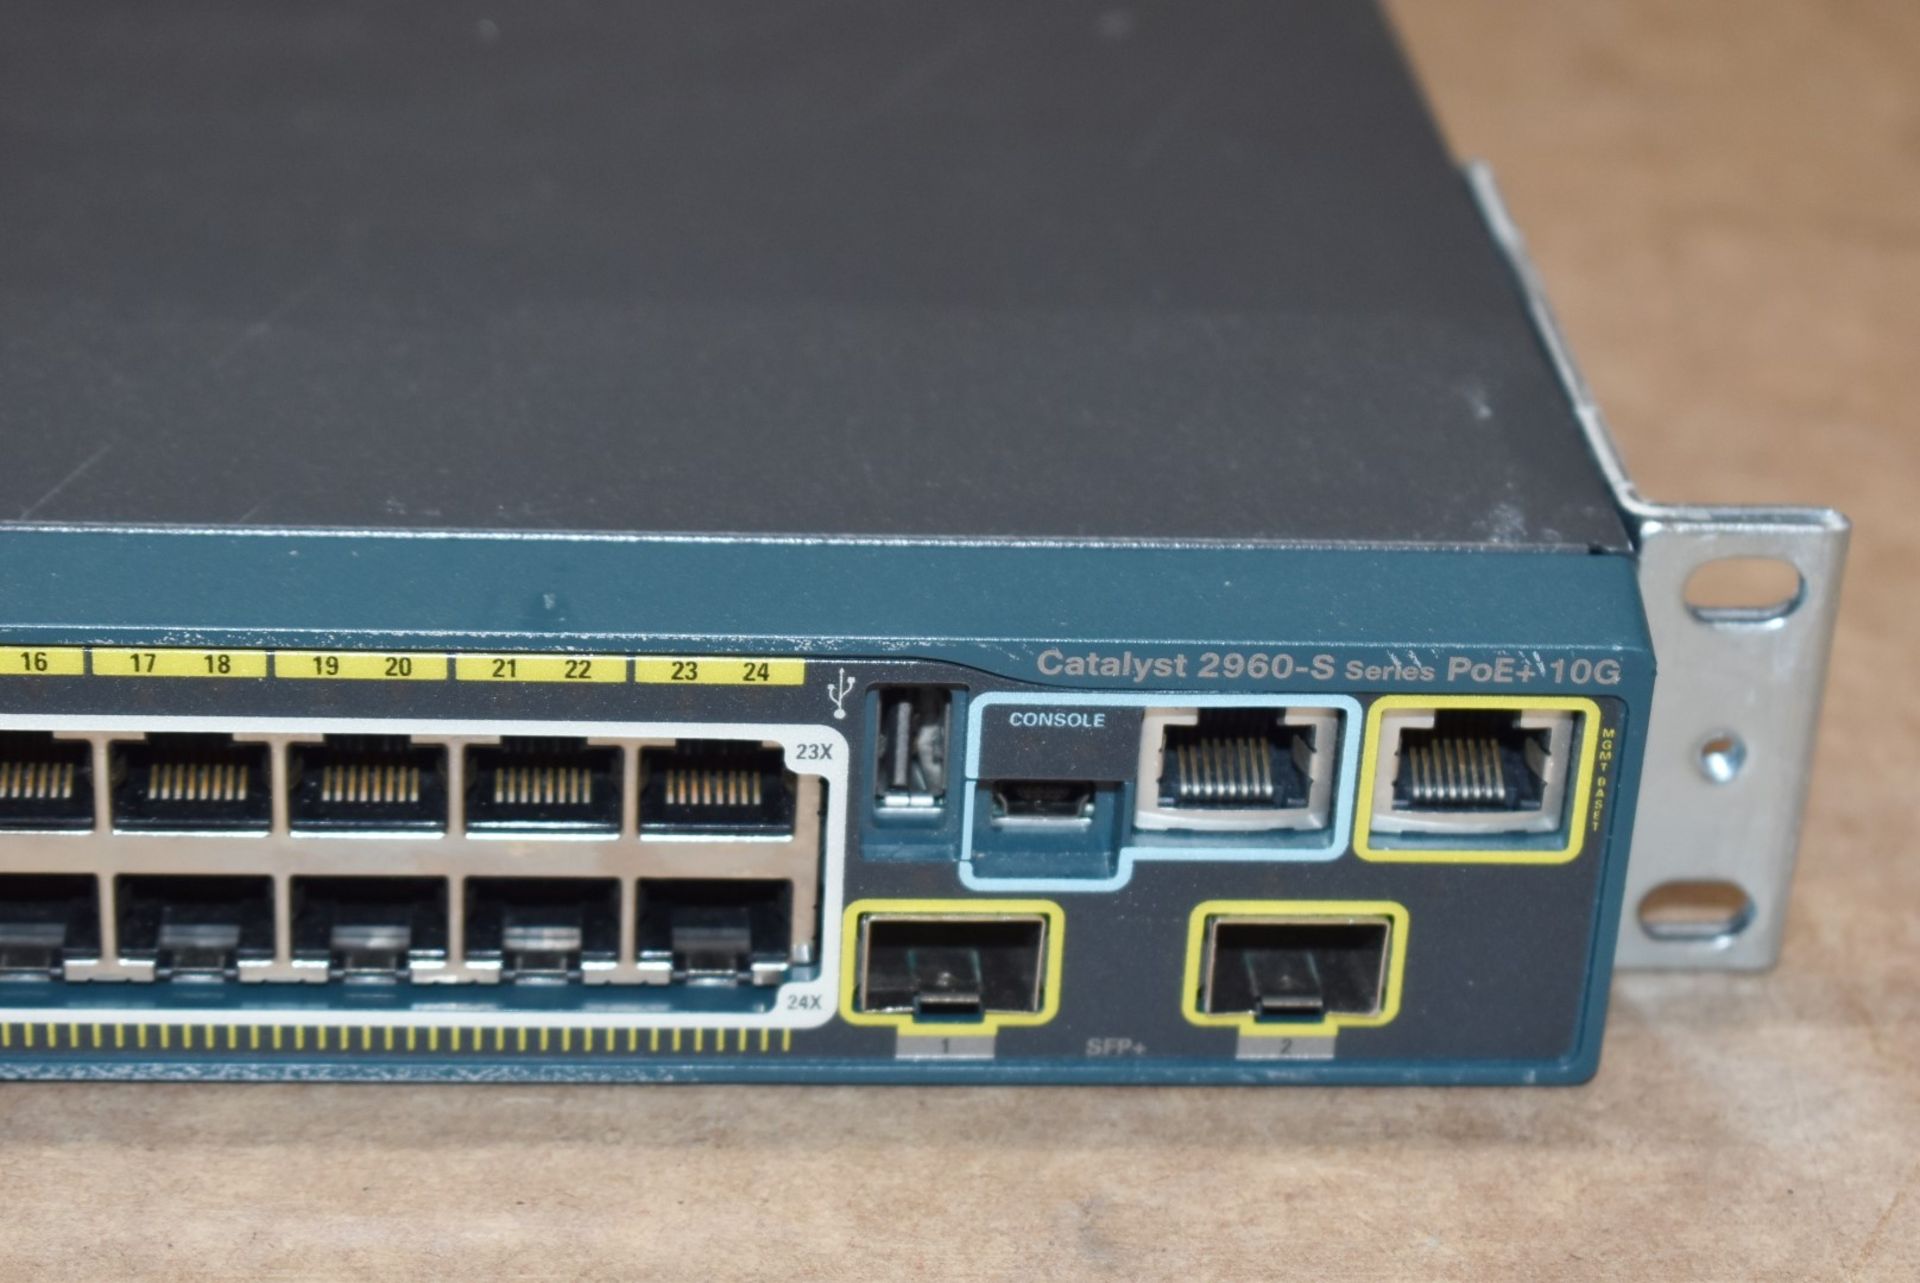 1 x Cisco 2960S Gigabit PoE 24 Port Switch - Model WS-C2960S-24PD-L - Ref: MPC182 CA - CL678 - - Image 2 of 8